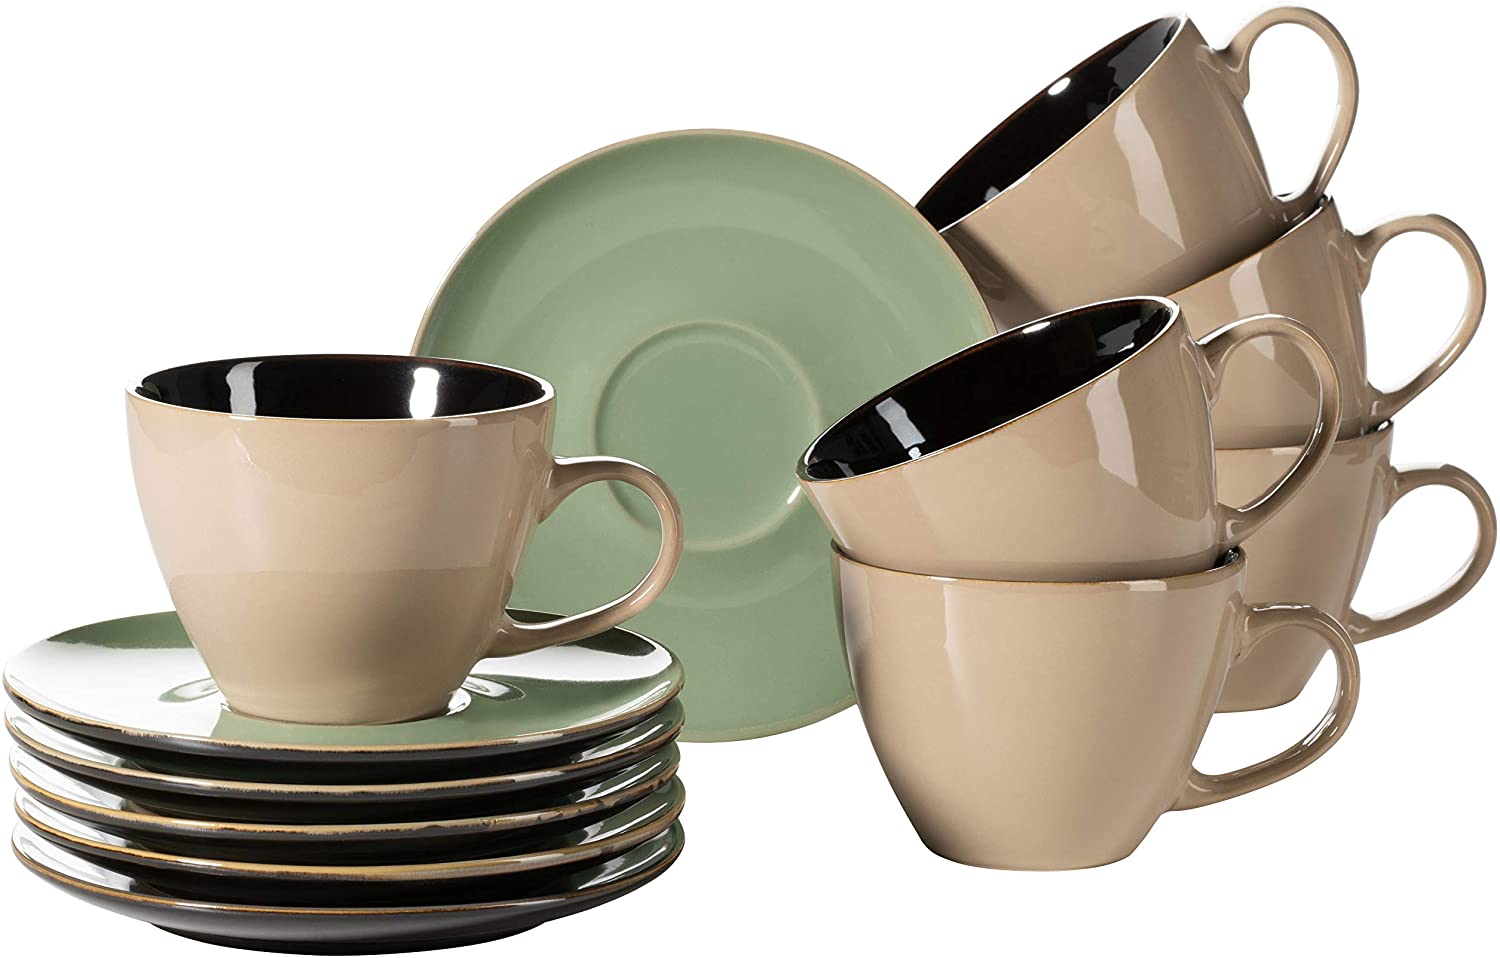 Mäser 931464 Scuro Series Ceramic Cappuccino Cups Set, Café Au Lait Cups with Saucers for 6 People, 450 ml, Stoneware